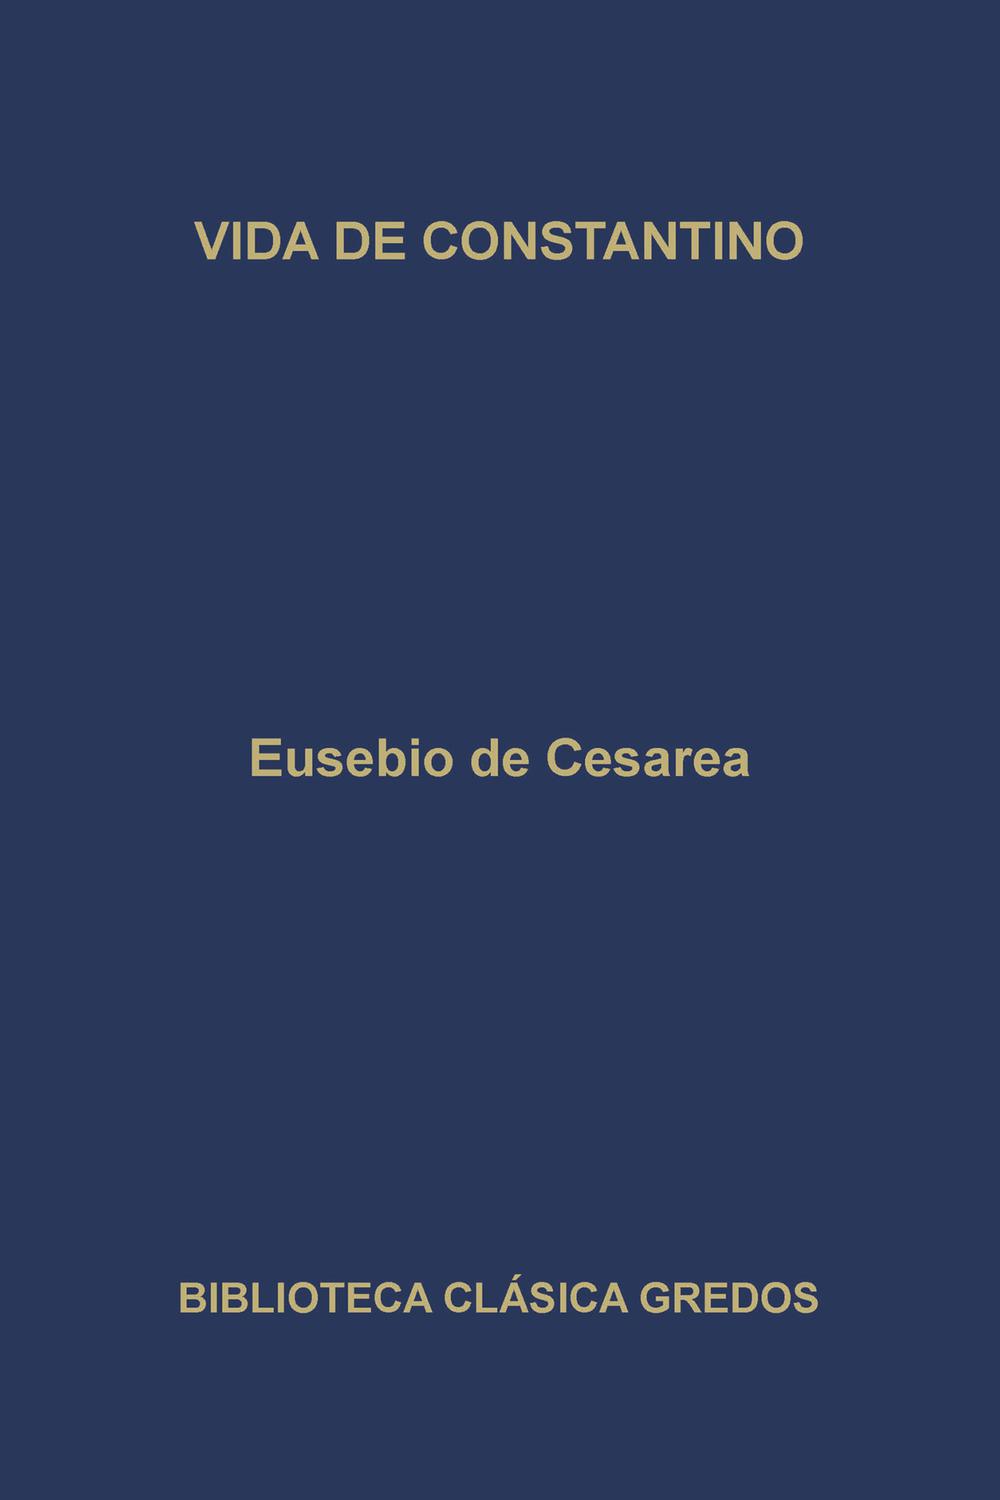 Vida de Constantino - Eusebio de Cesarea, Martín Gurruchaga, José Mª Candau